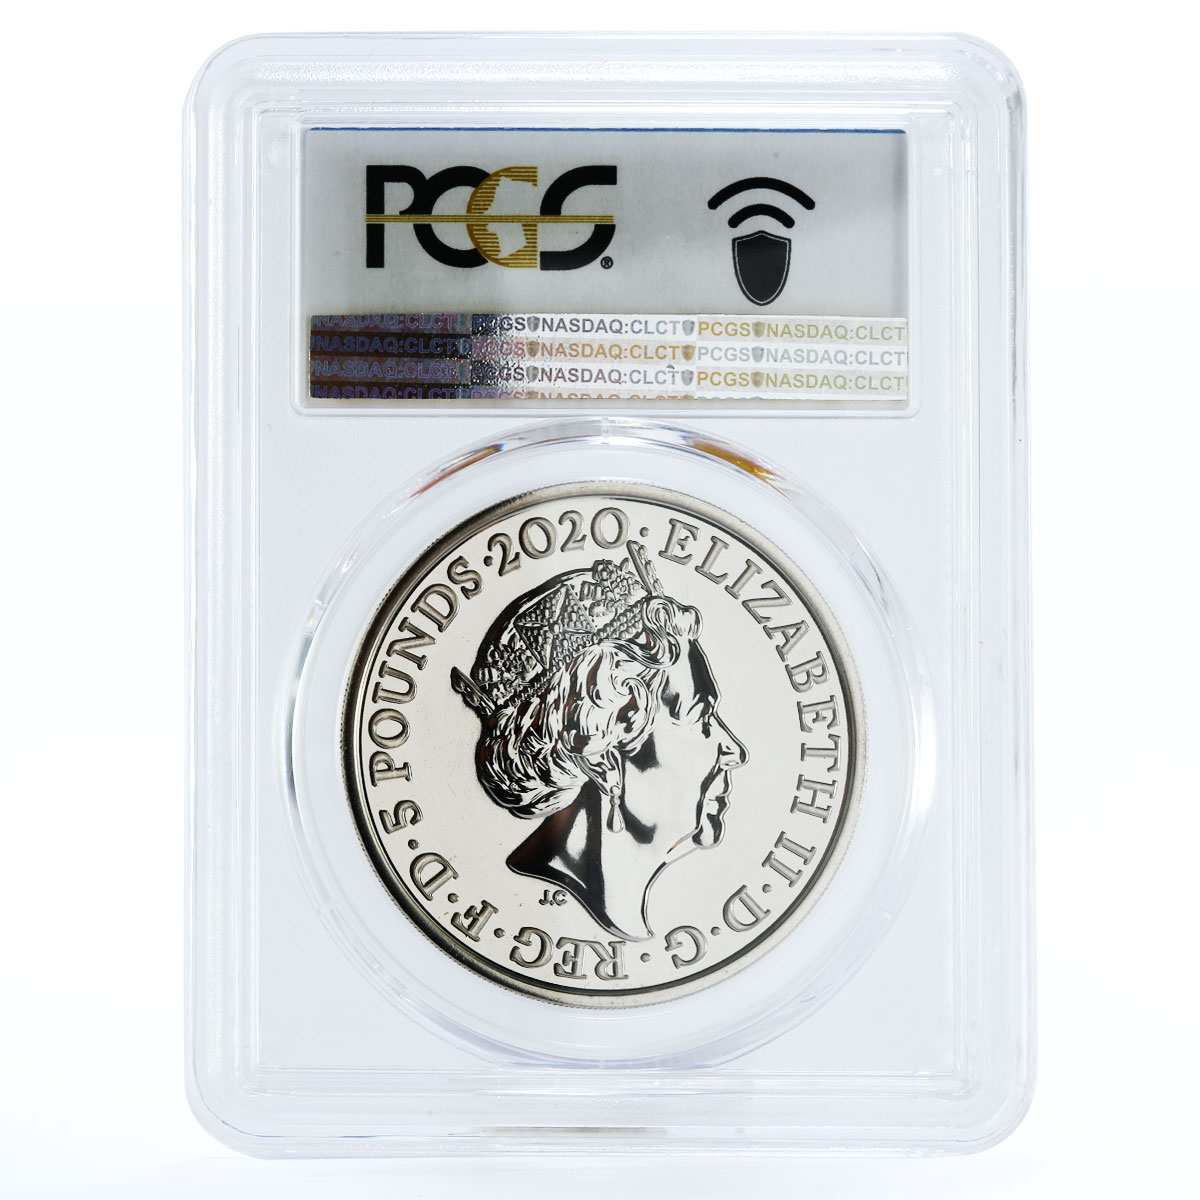 Britain 5 pounds Bondiana series Bond, James Bond MS69 PCGS CuNi coin 2020